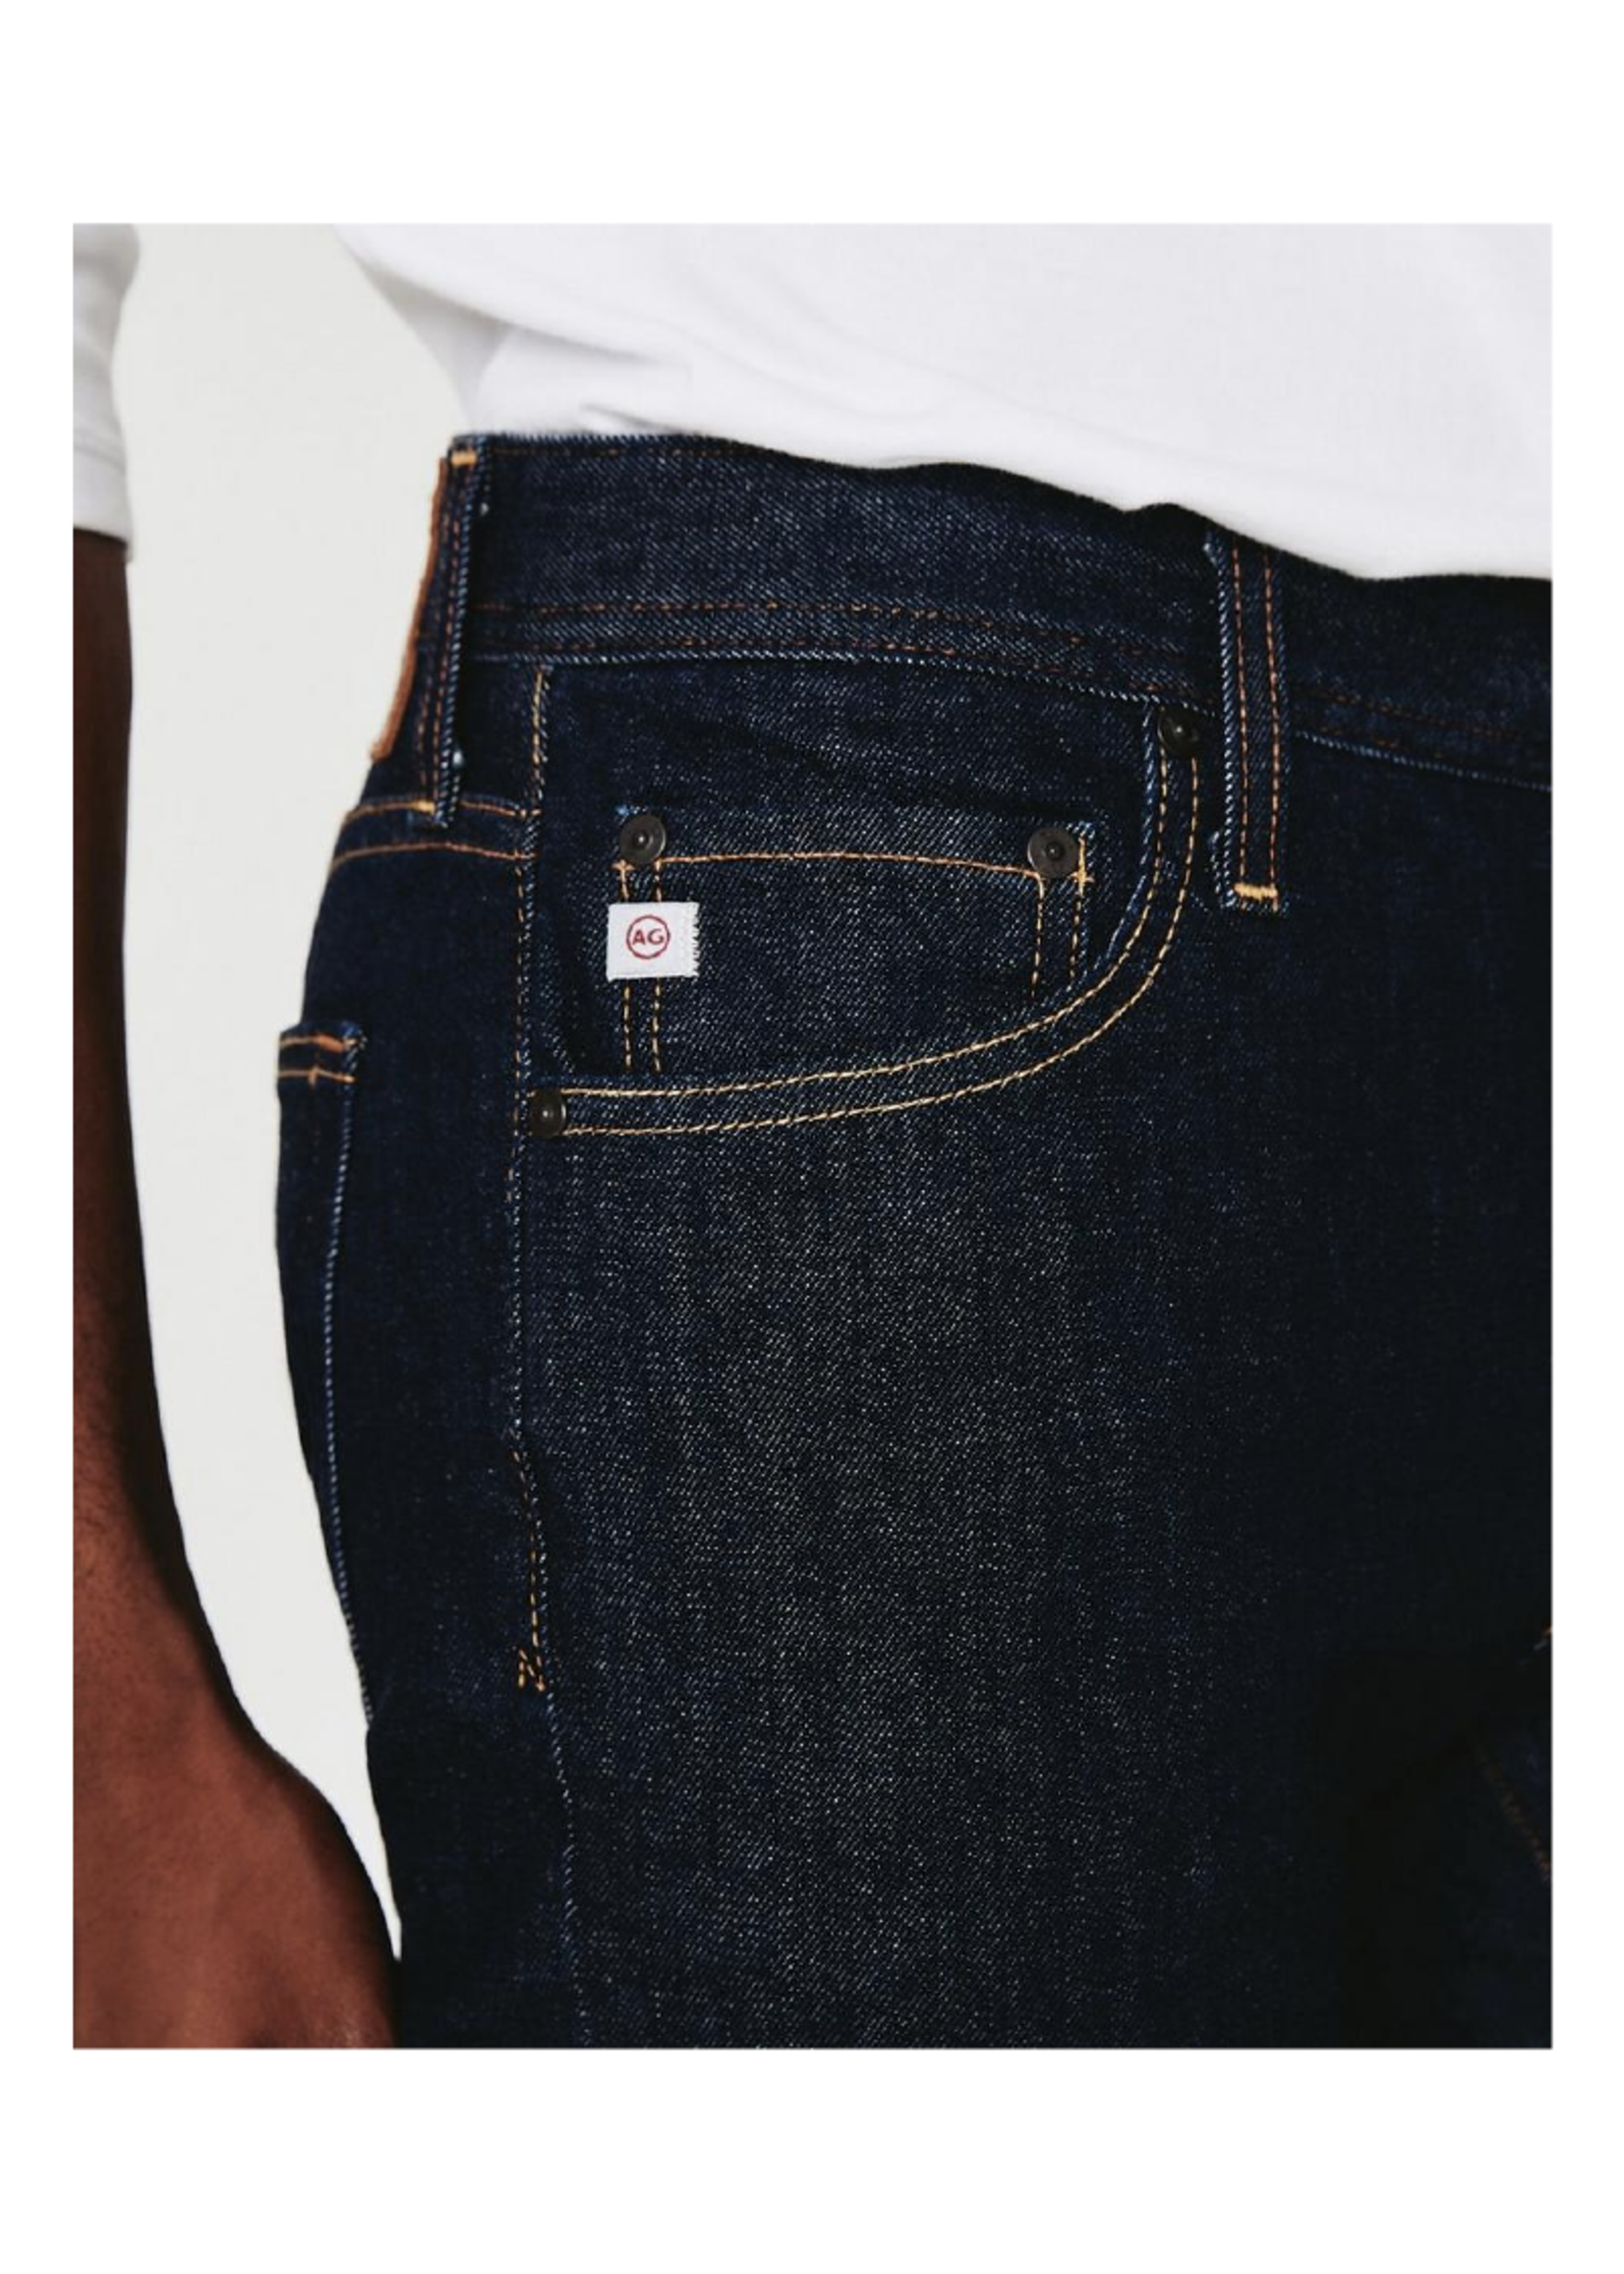 AG Jeans Tellis Core Crucial